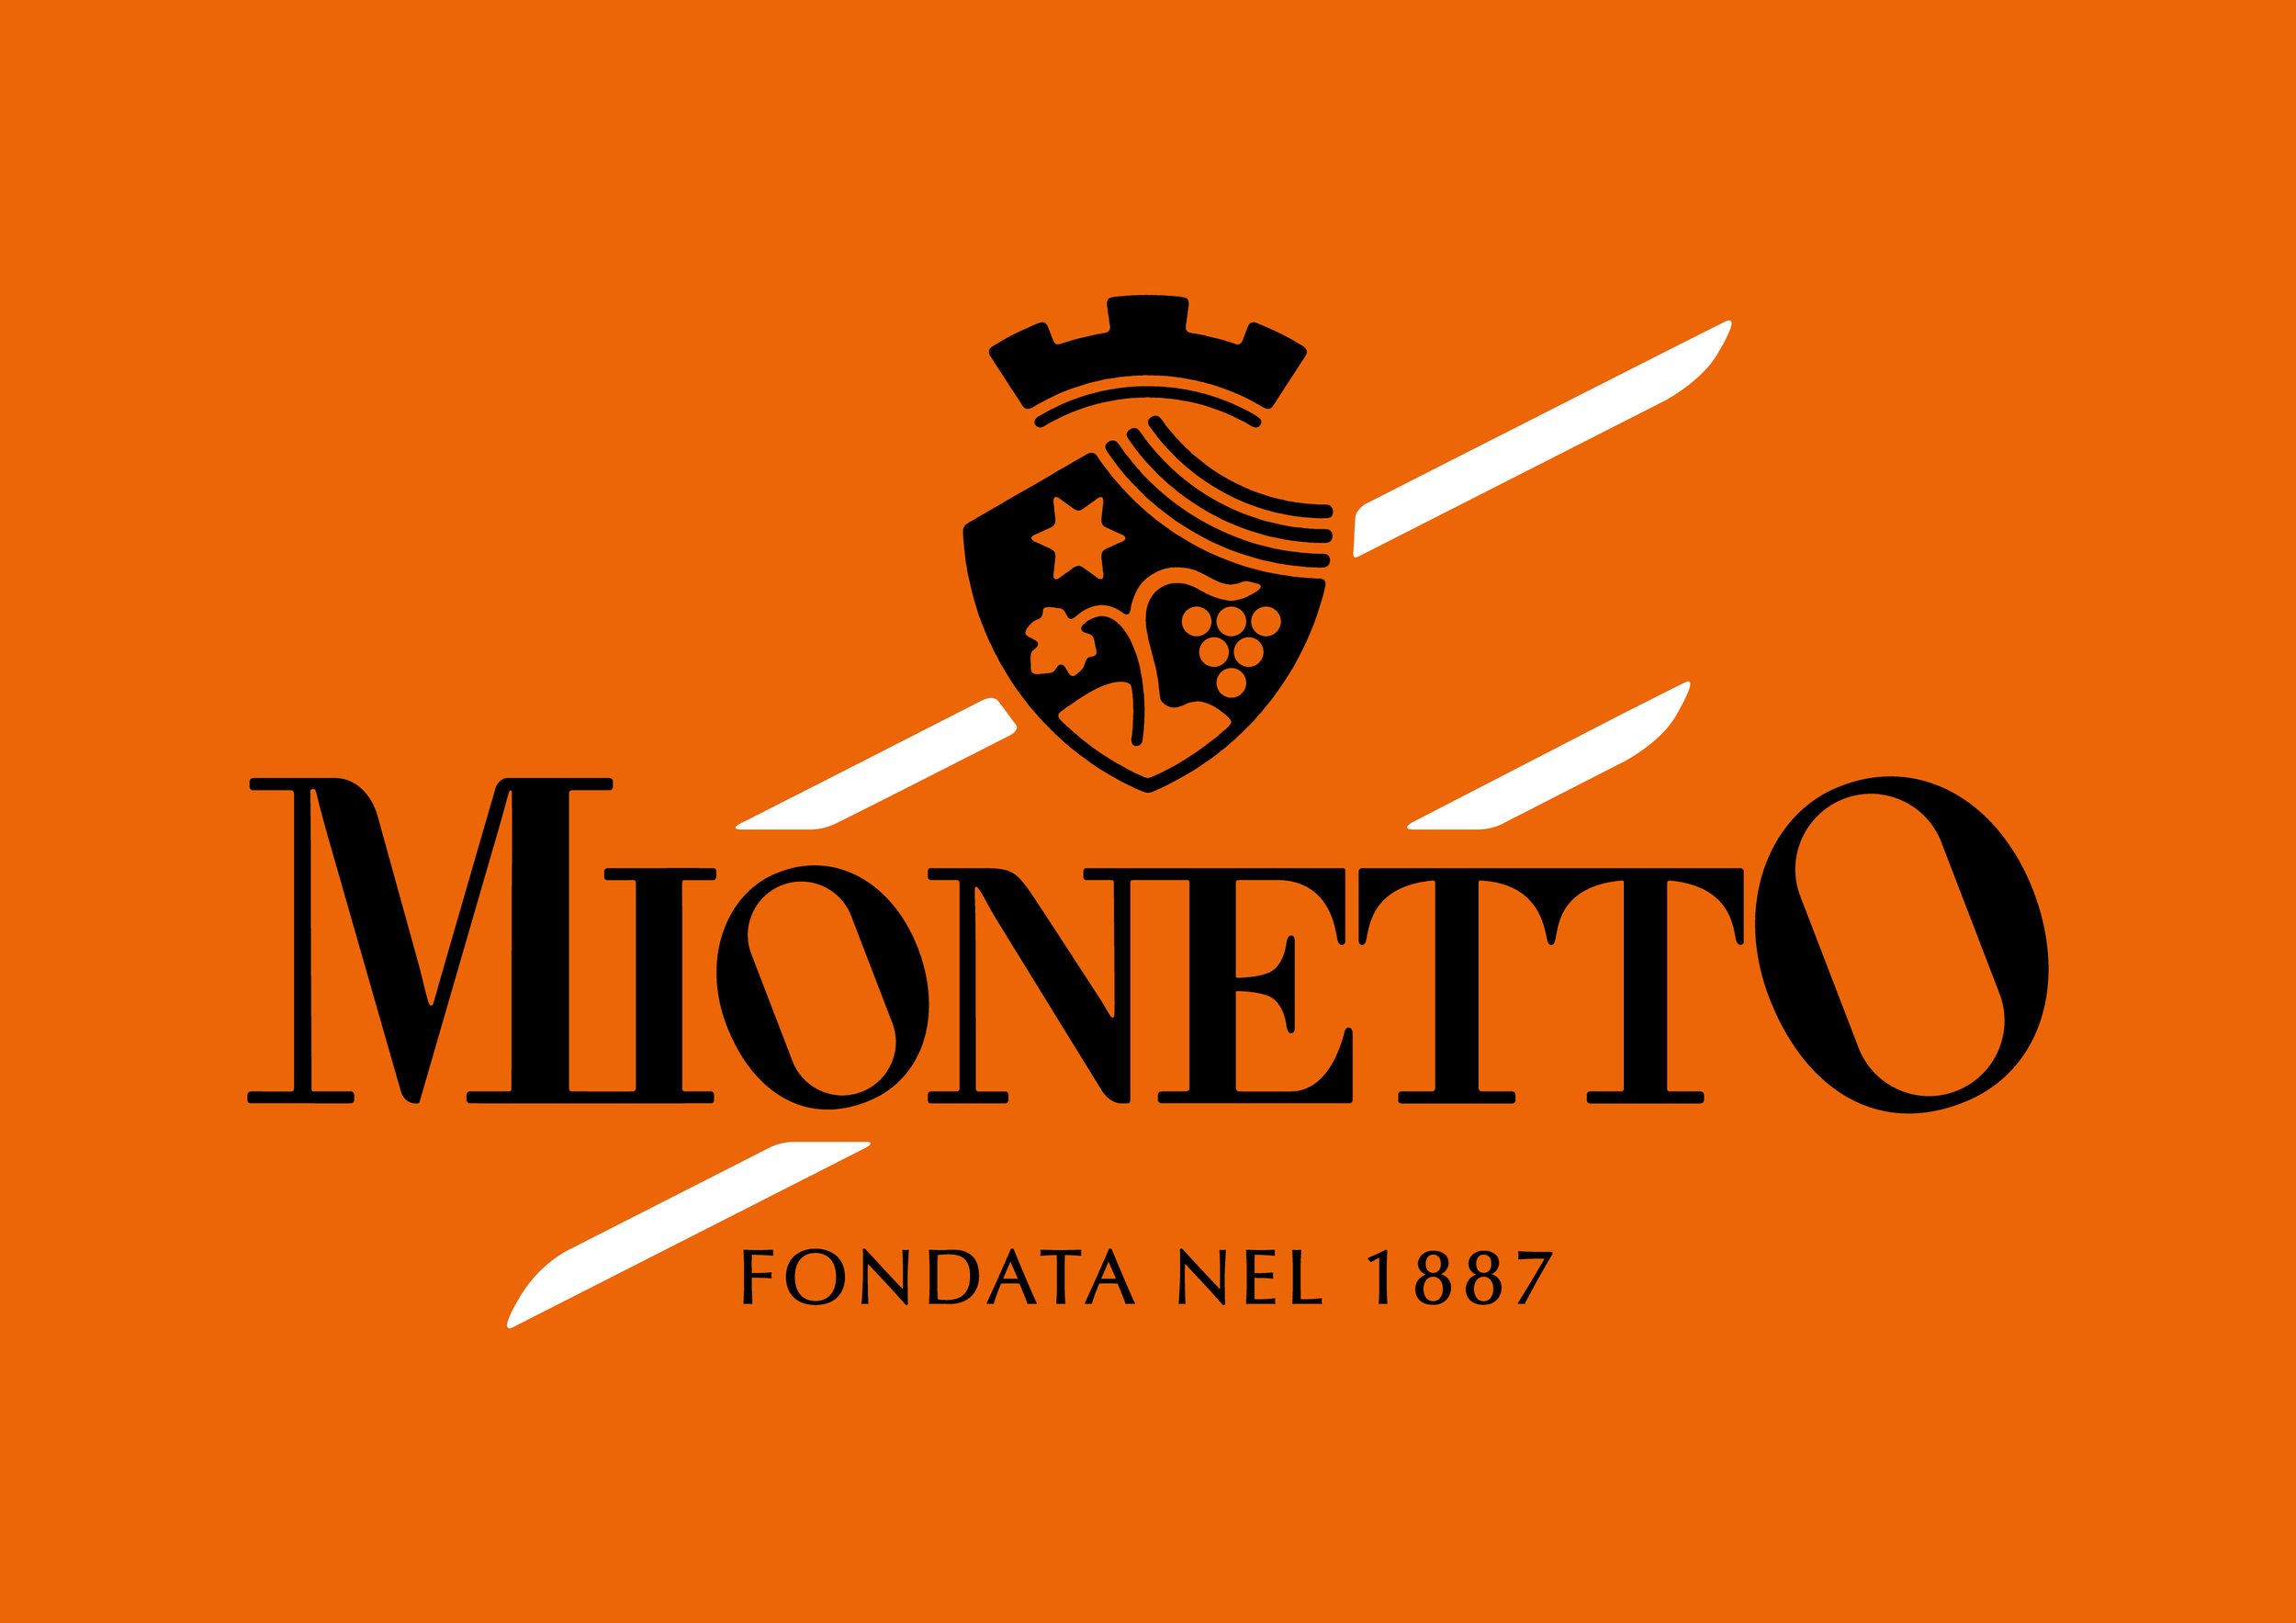 Mionetto_Logo-2020_orange-background.jpeg